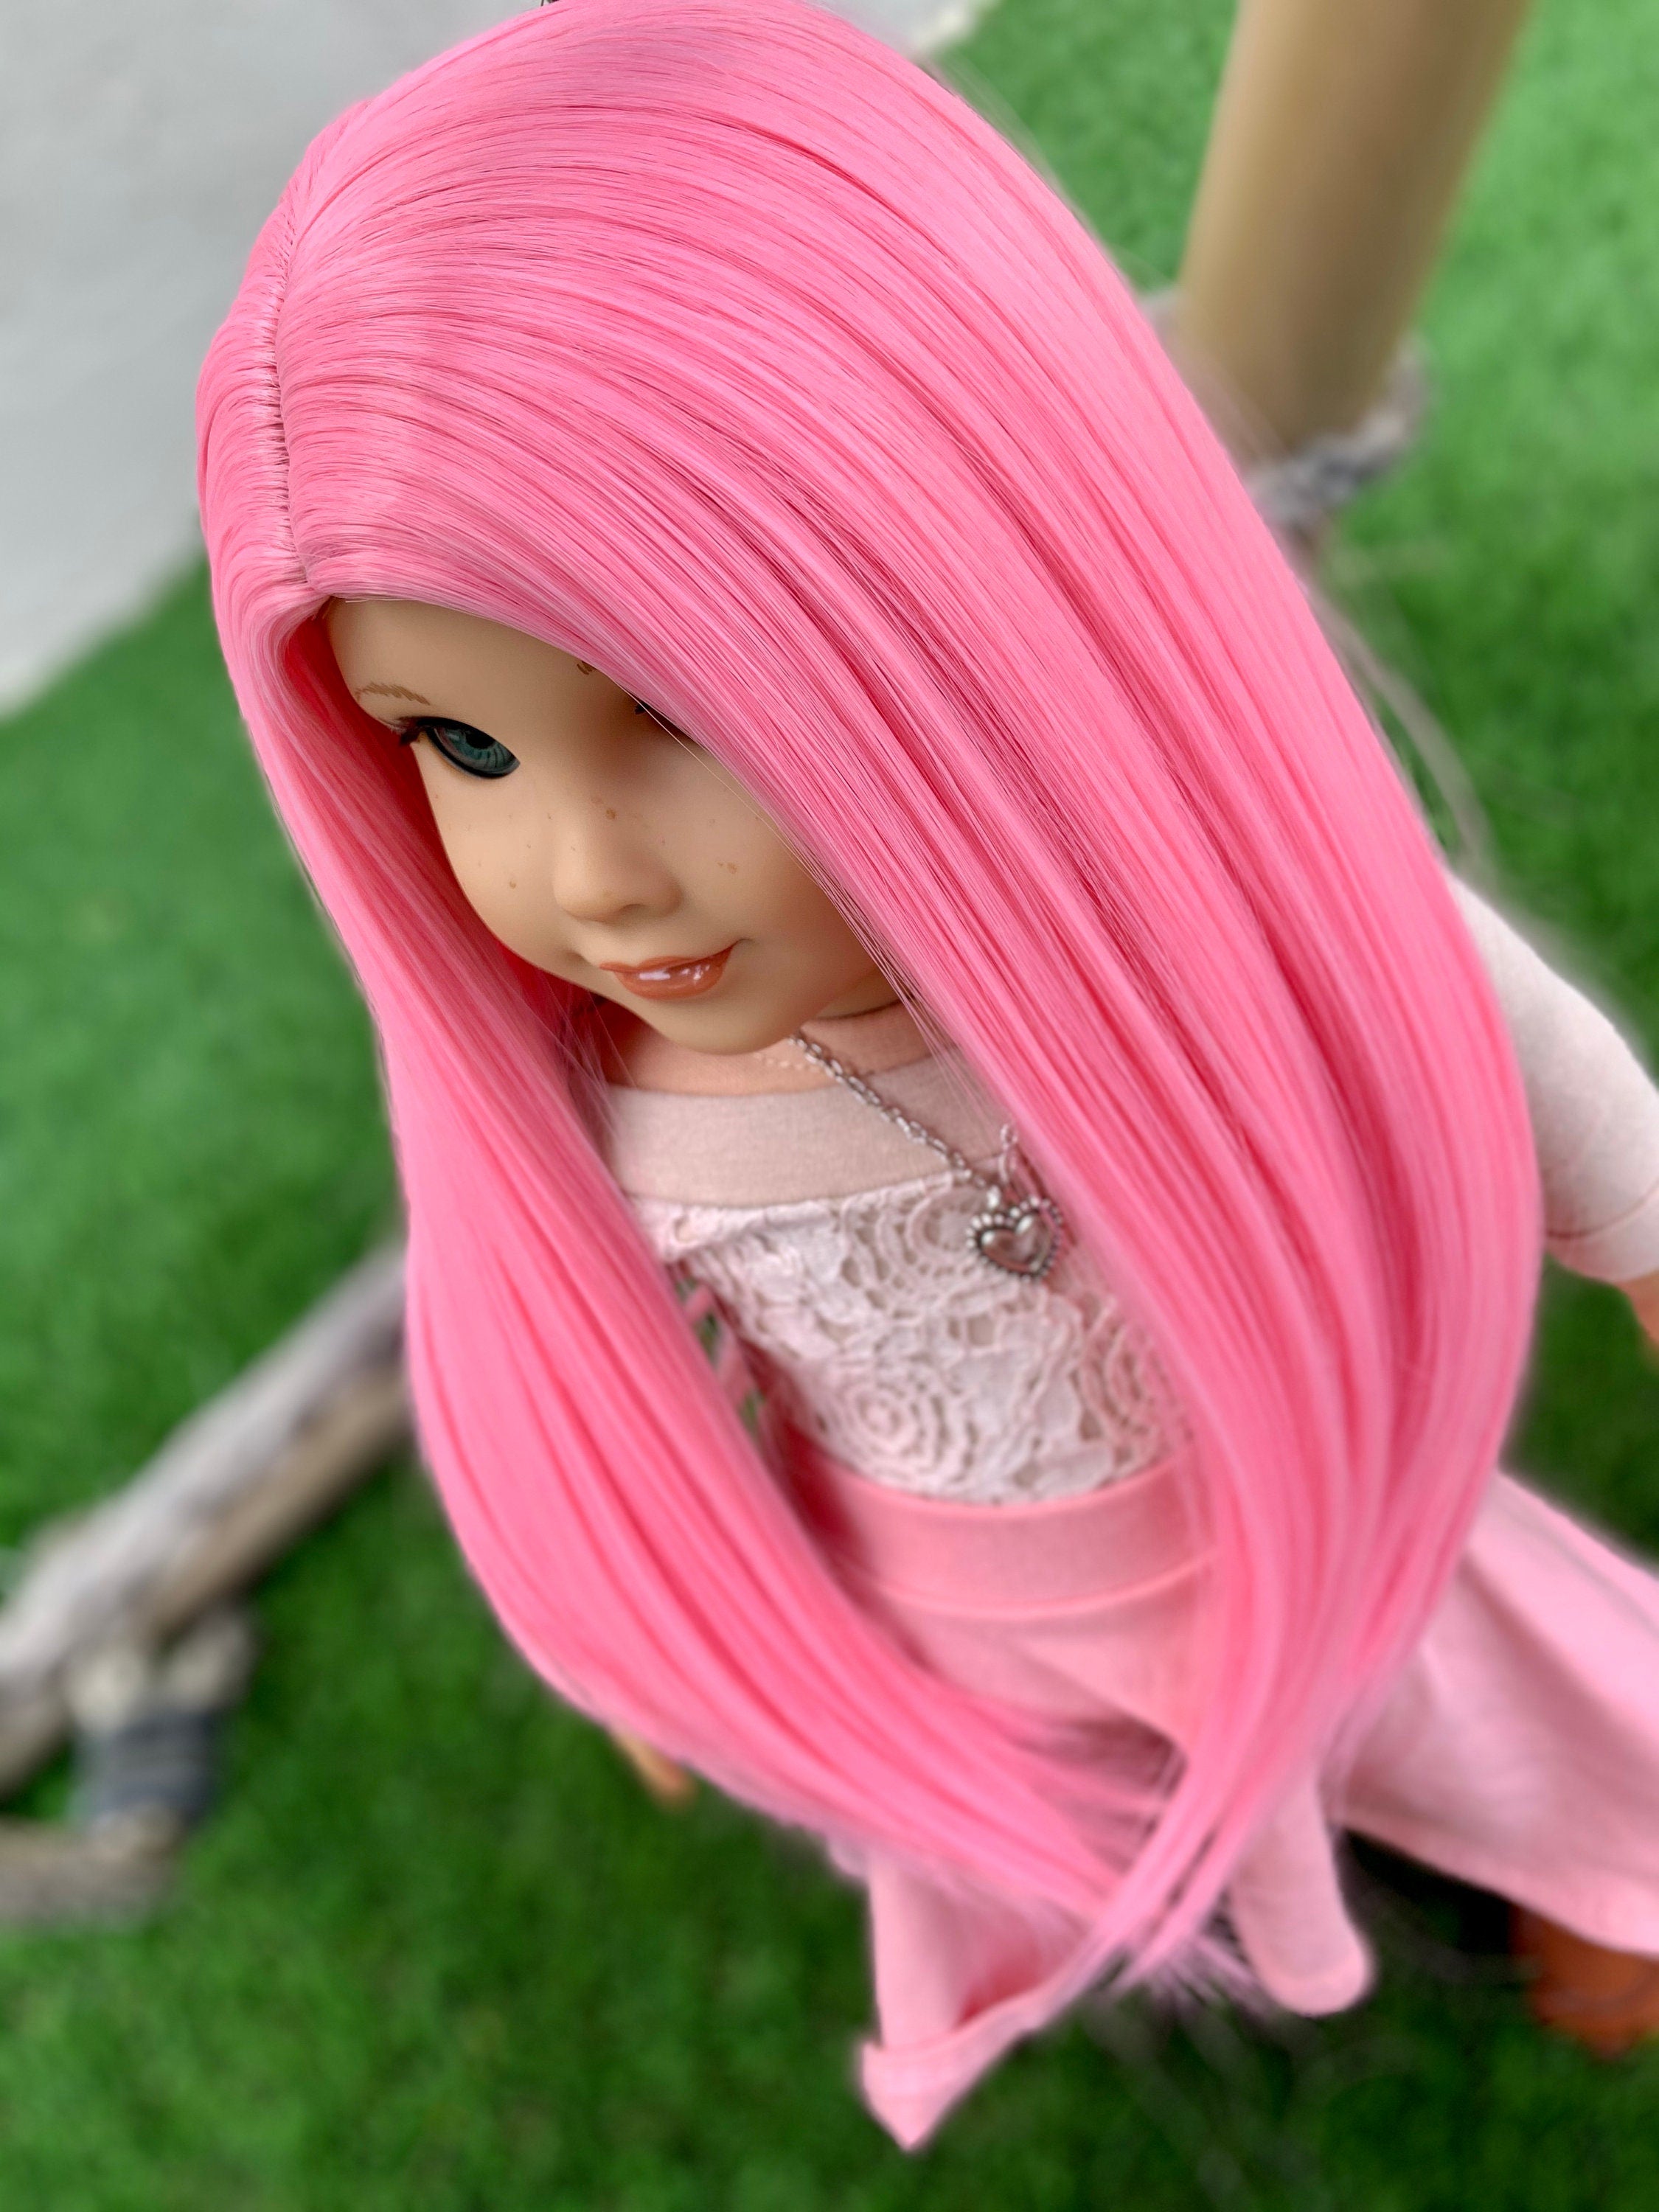 Custom doll wig for 18" American Girl Dolls - Heat Safe - Tangle Resistant - fits 10-11" head size of 18" dolls  Blythe BJD Gotz  pink